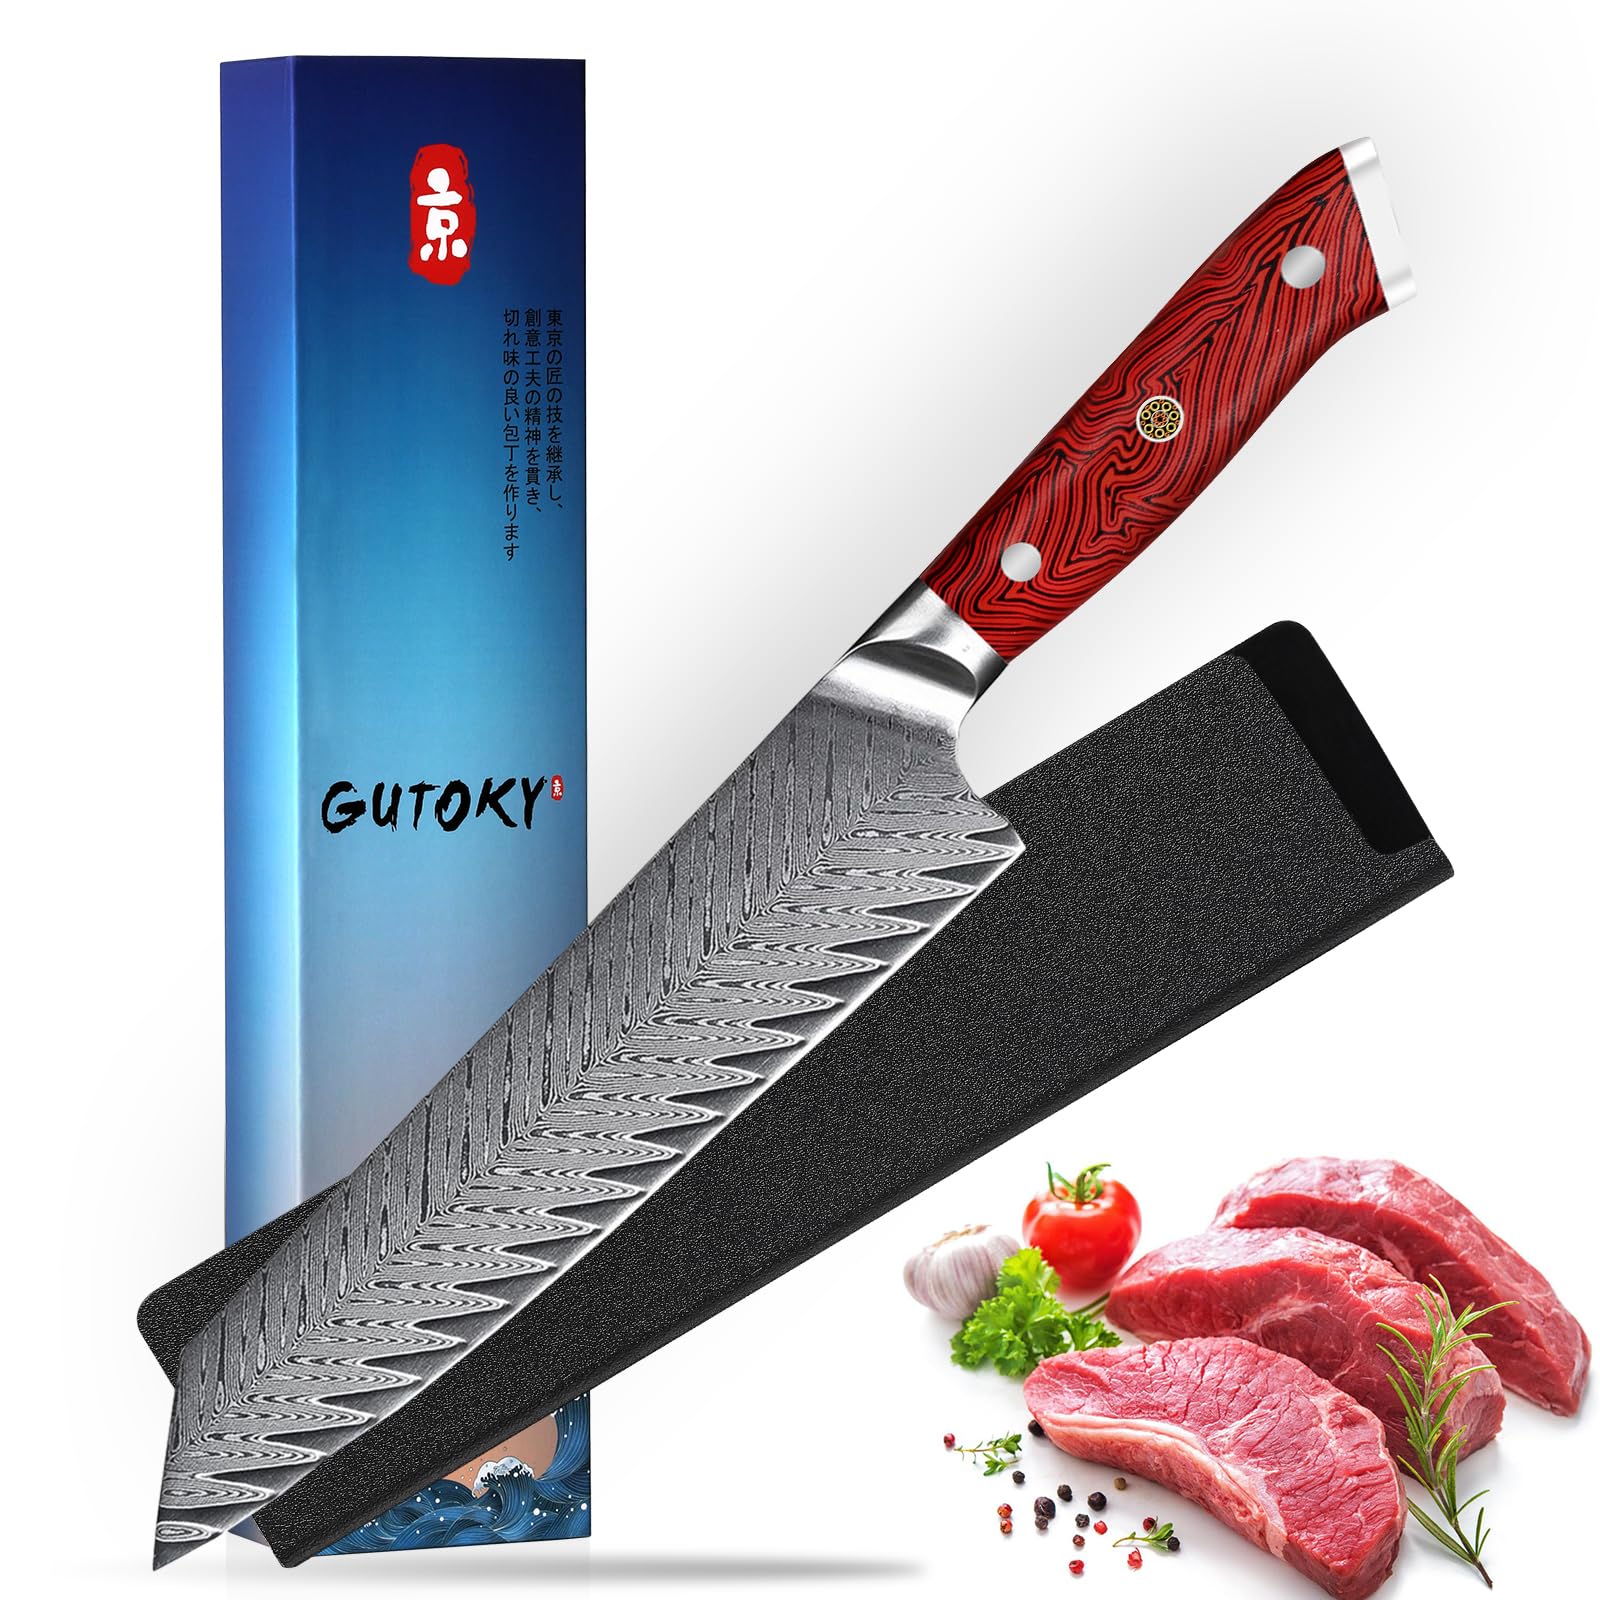 Gutoky Japanese Chef Knife